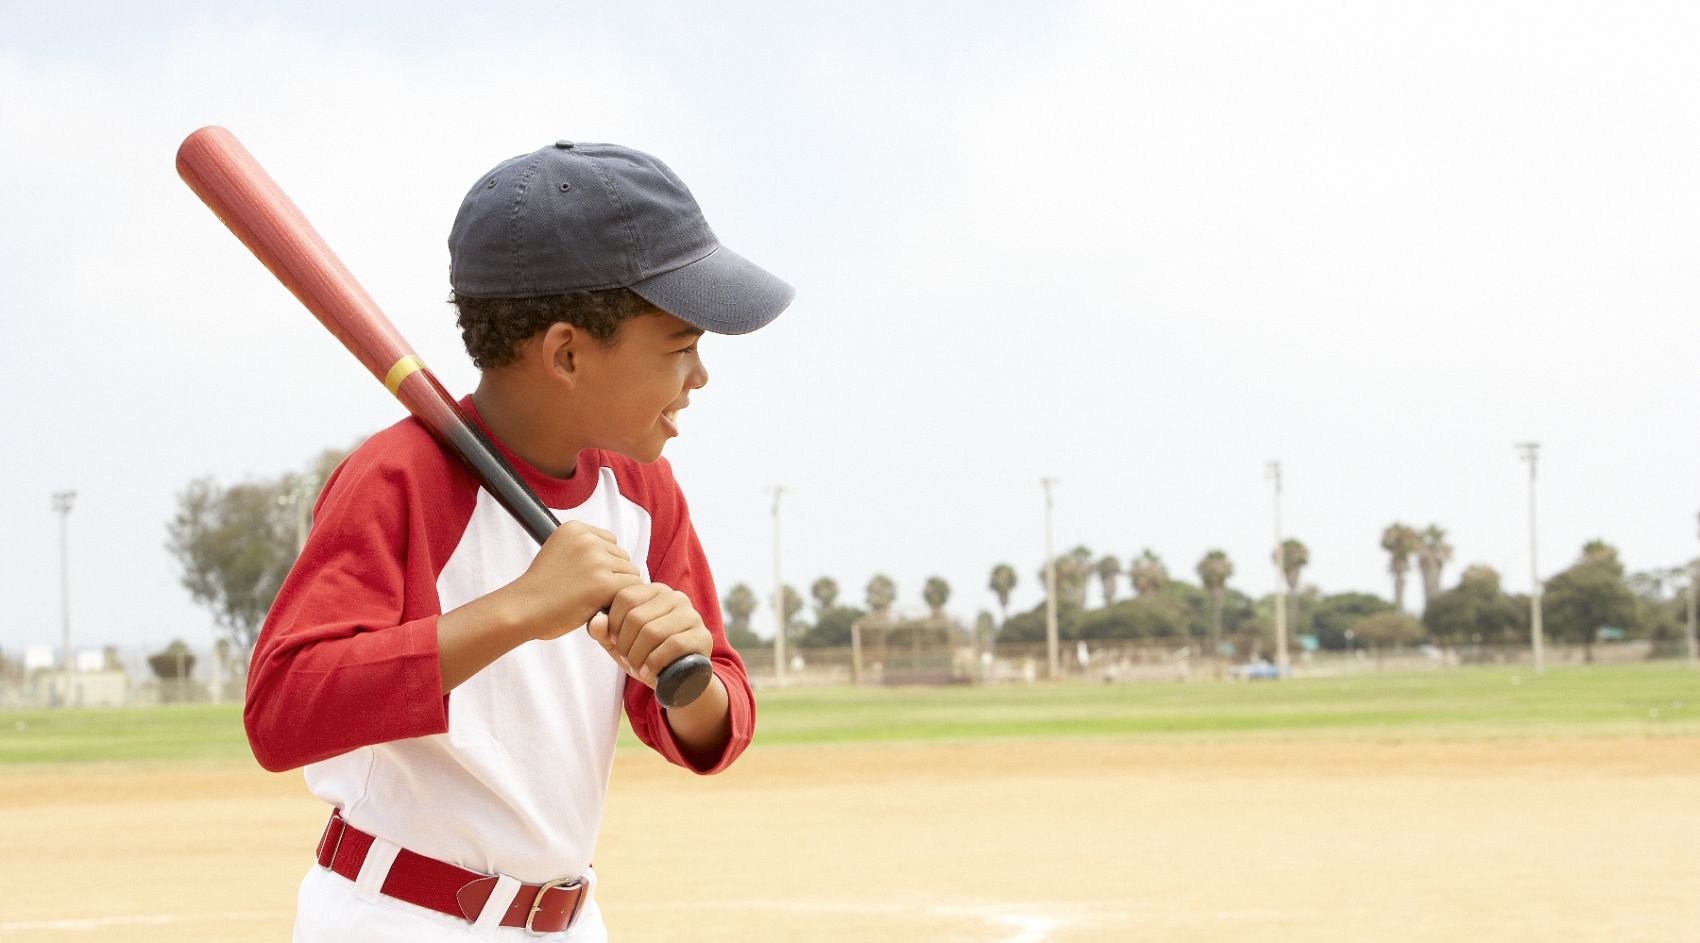 black child playing baseball